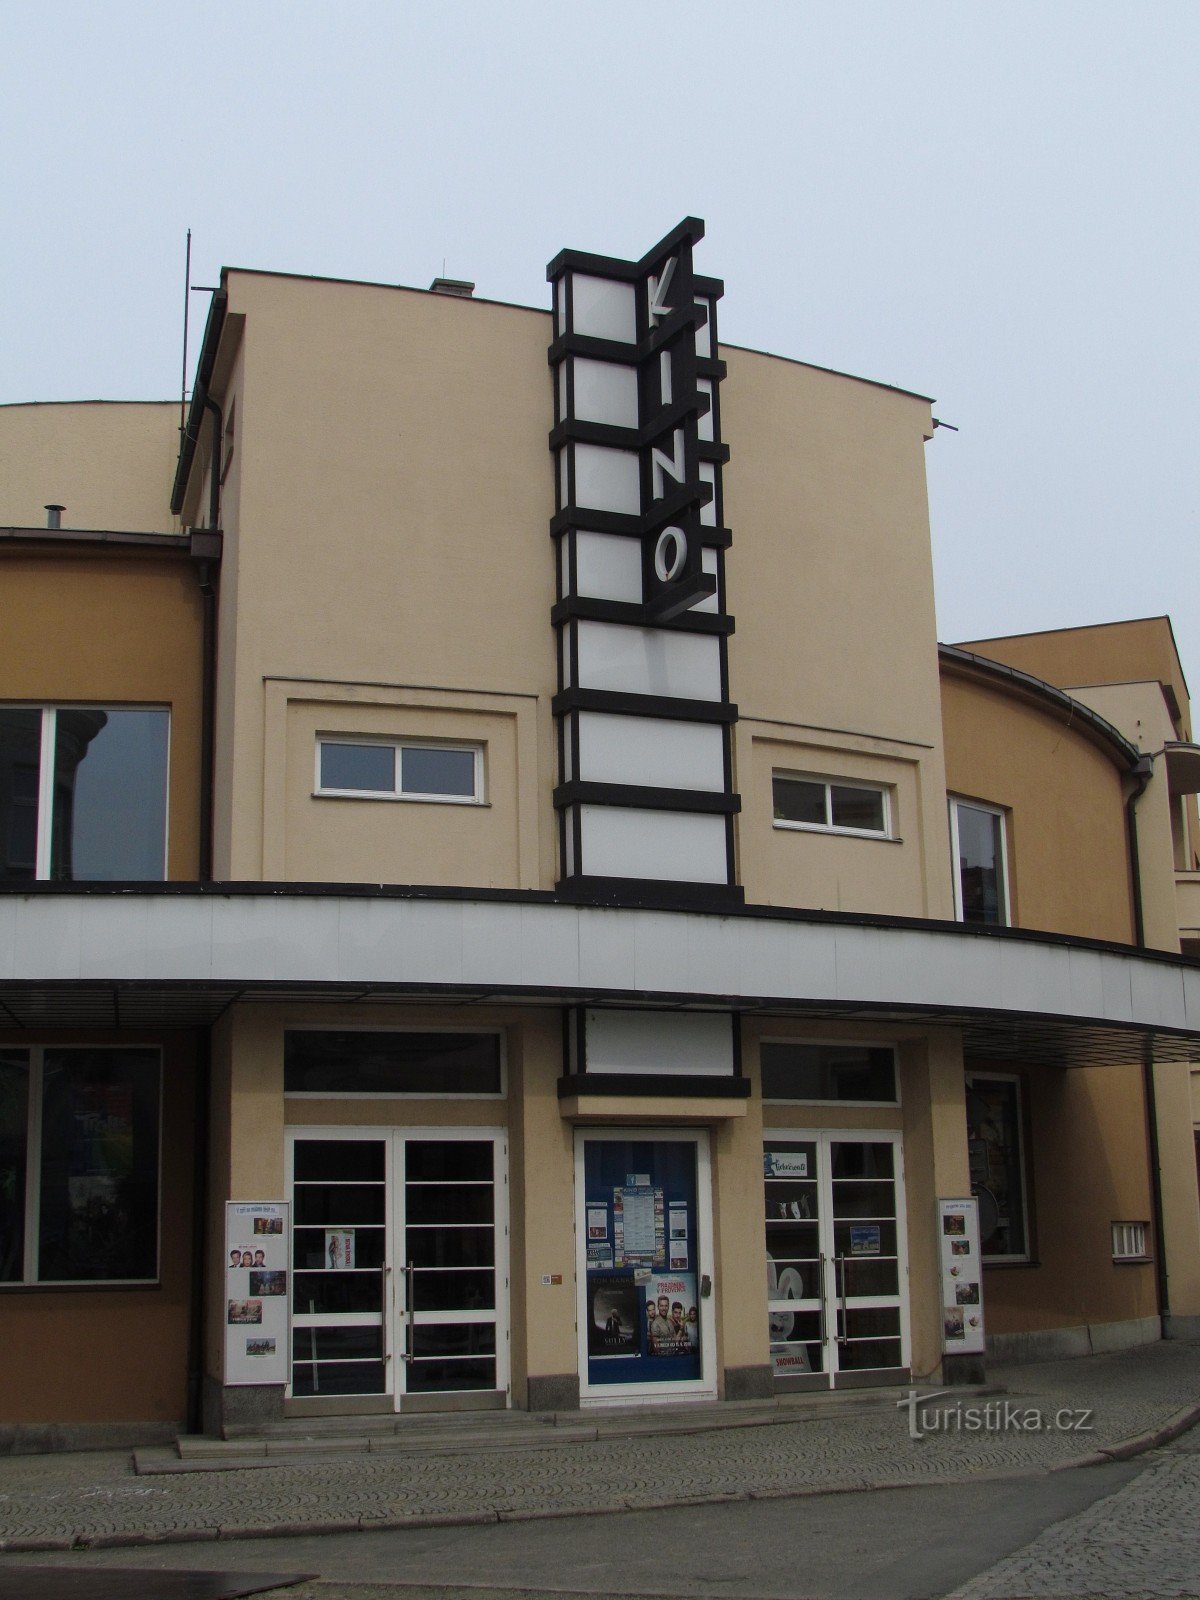 Nový Jičín - cine de la ciudad